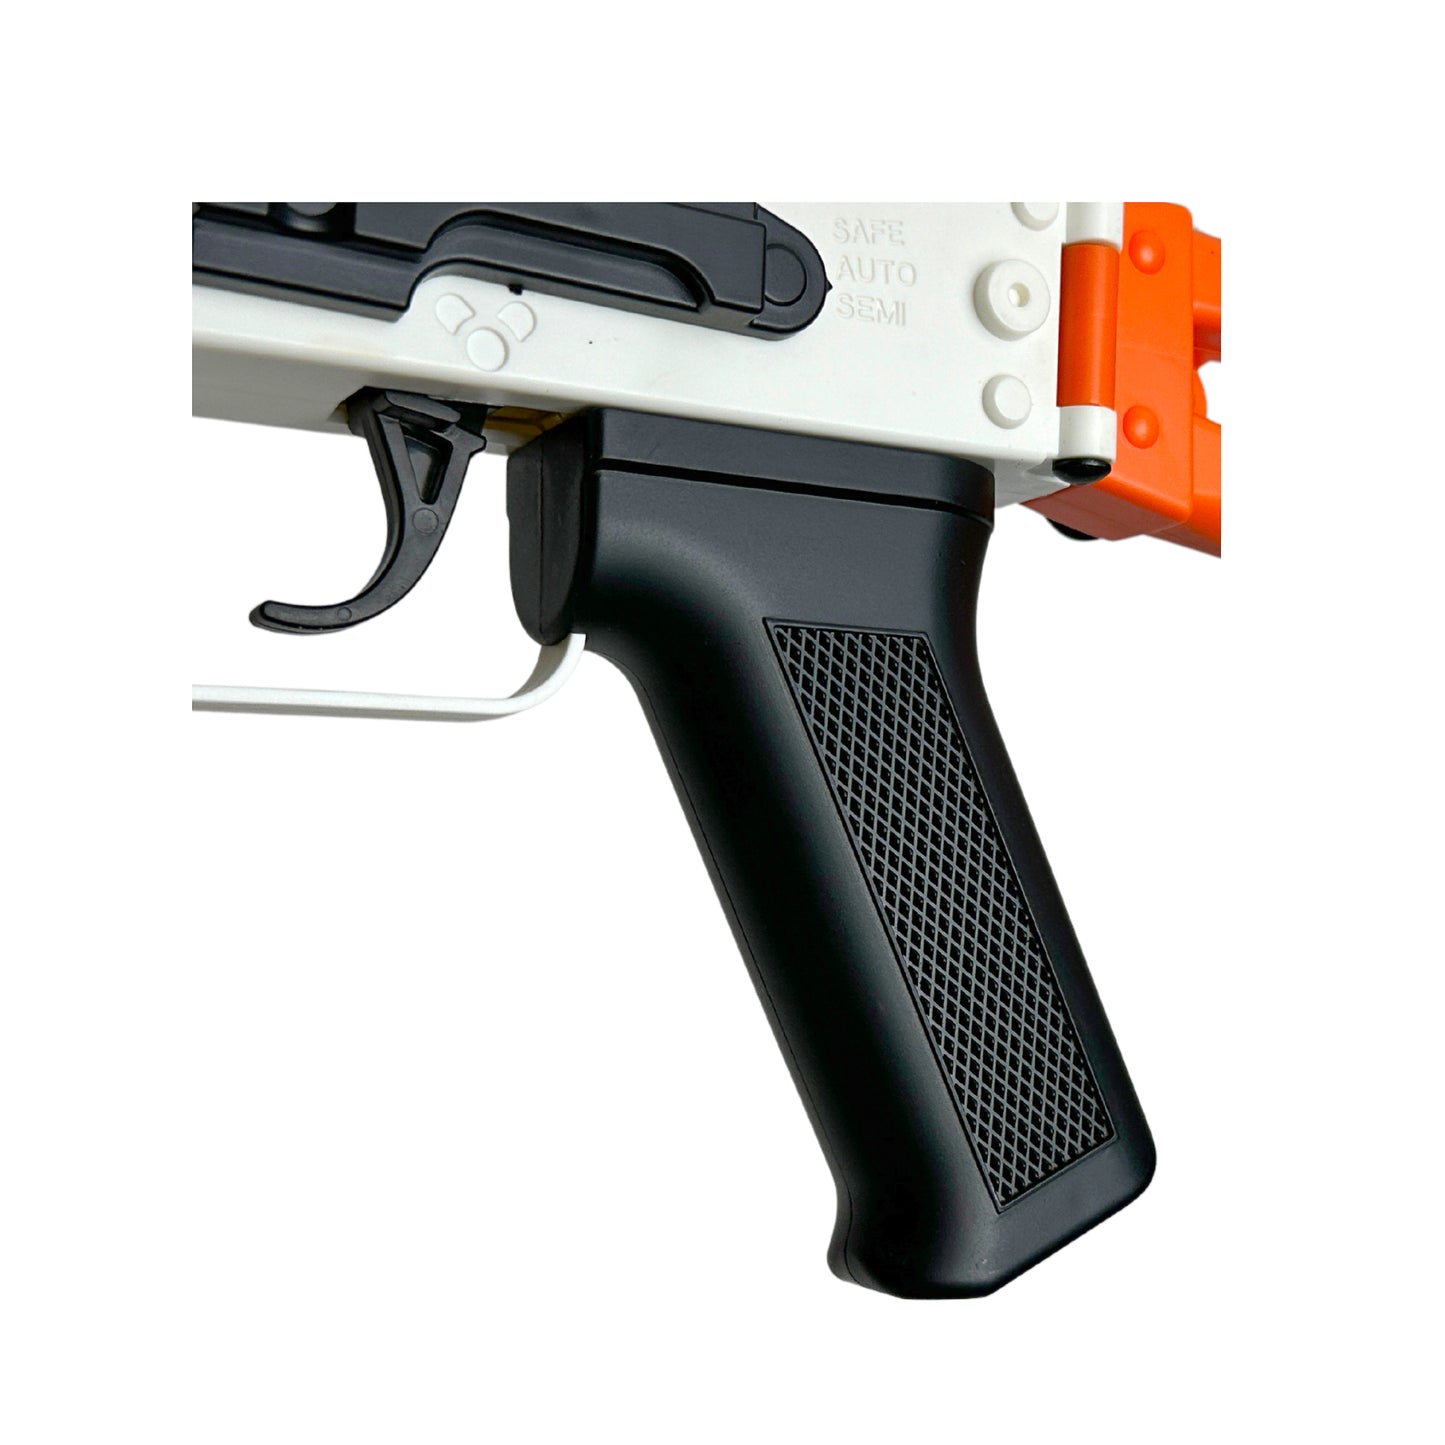 LH AK74U Rifle - Gel Blaster (Orange)